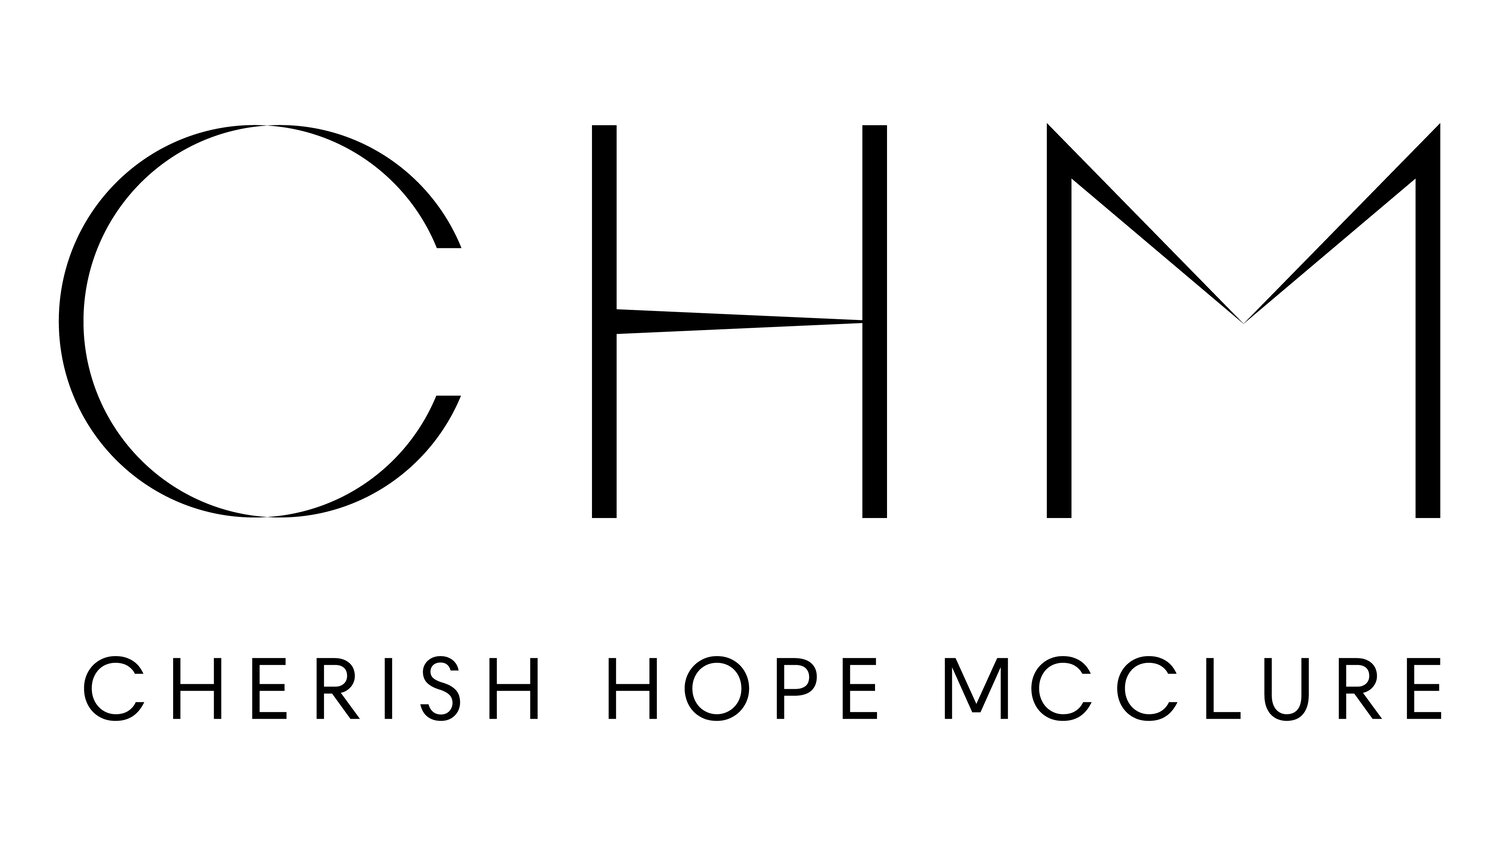 Cherish Hope McClure